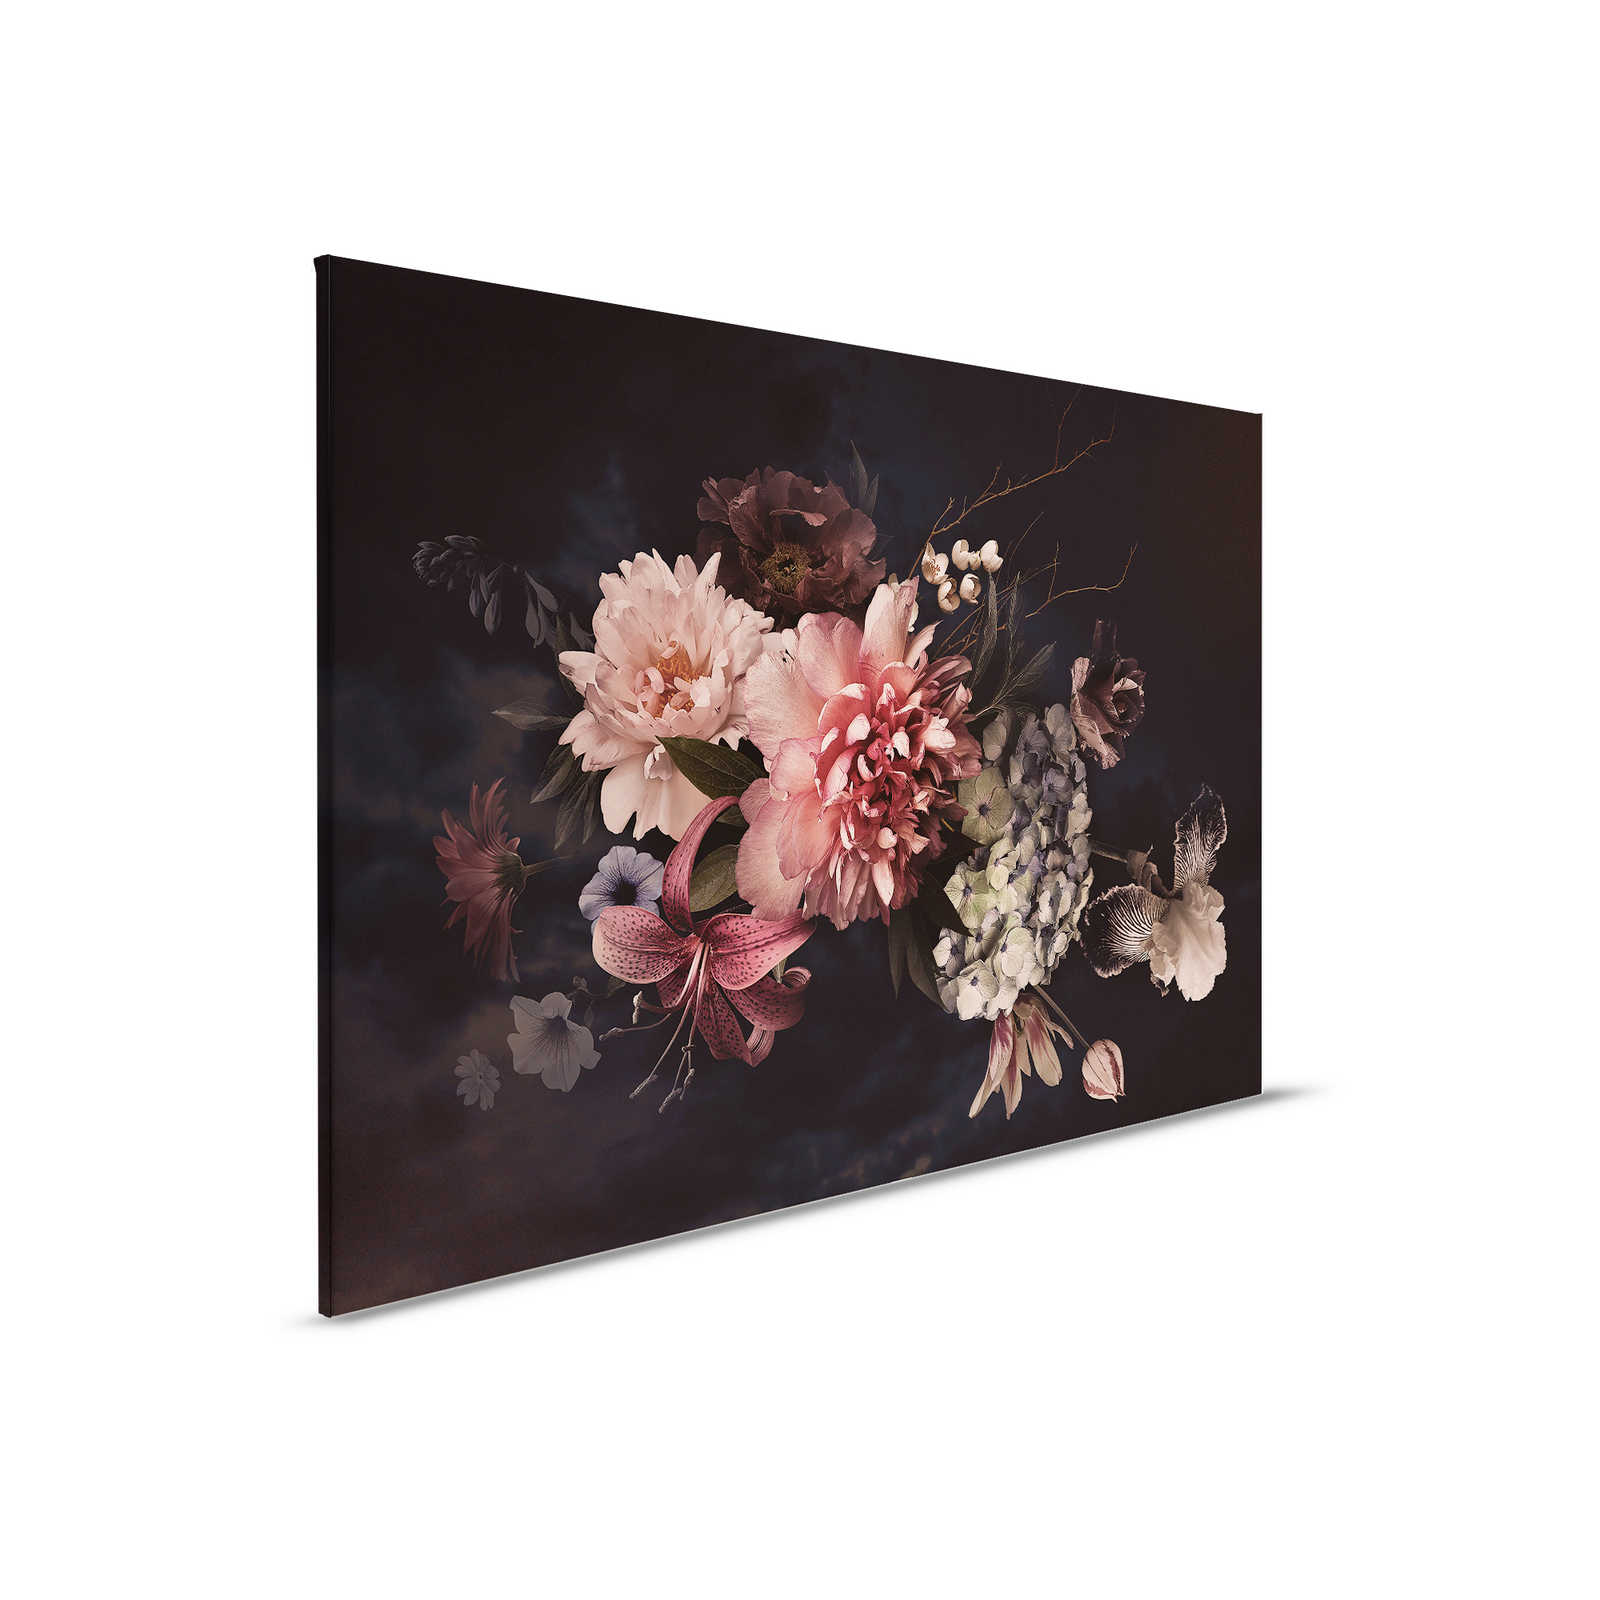 Tela con bouquet in stile botanico | rosa, nero - 0,90 m x 0,60 m
